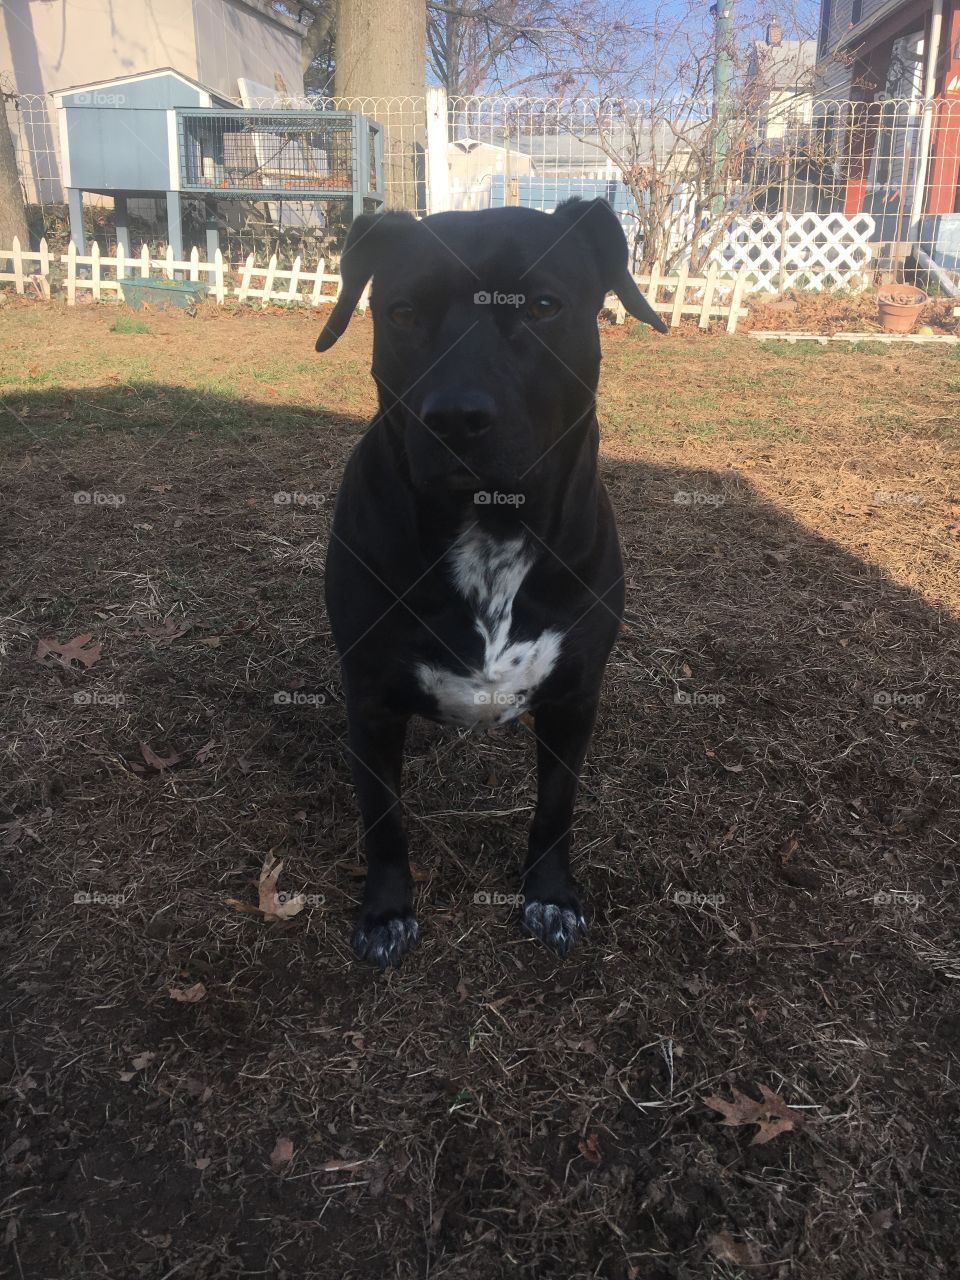 Dog (kayla) standing outside on grass